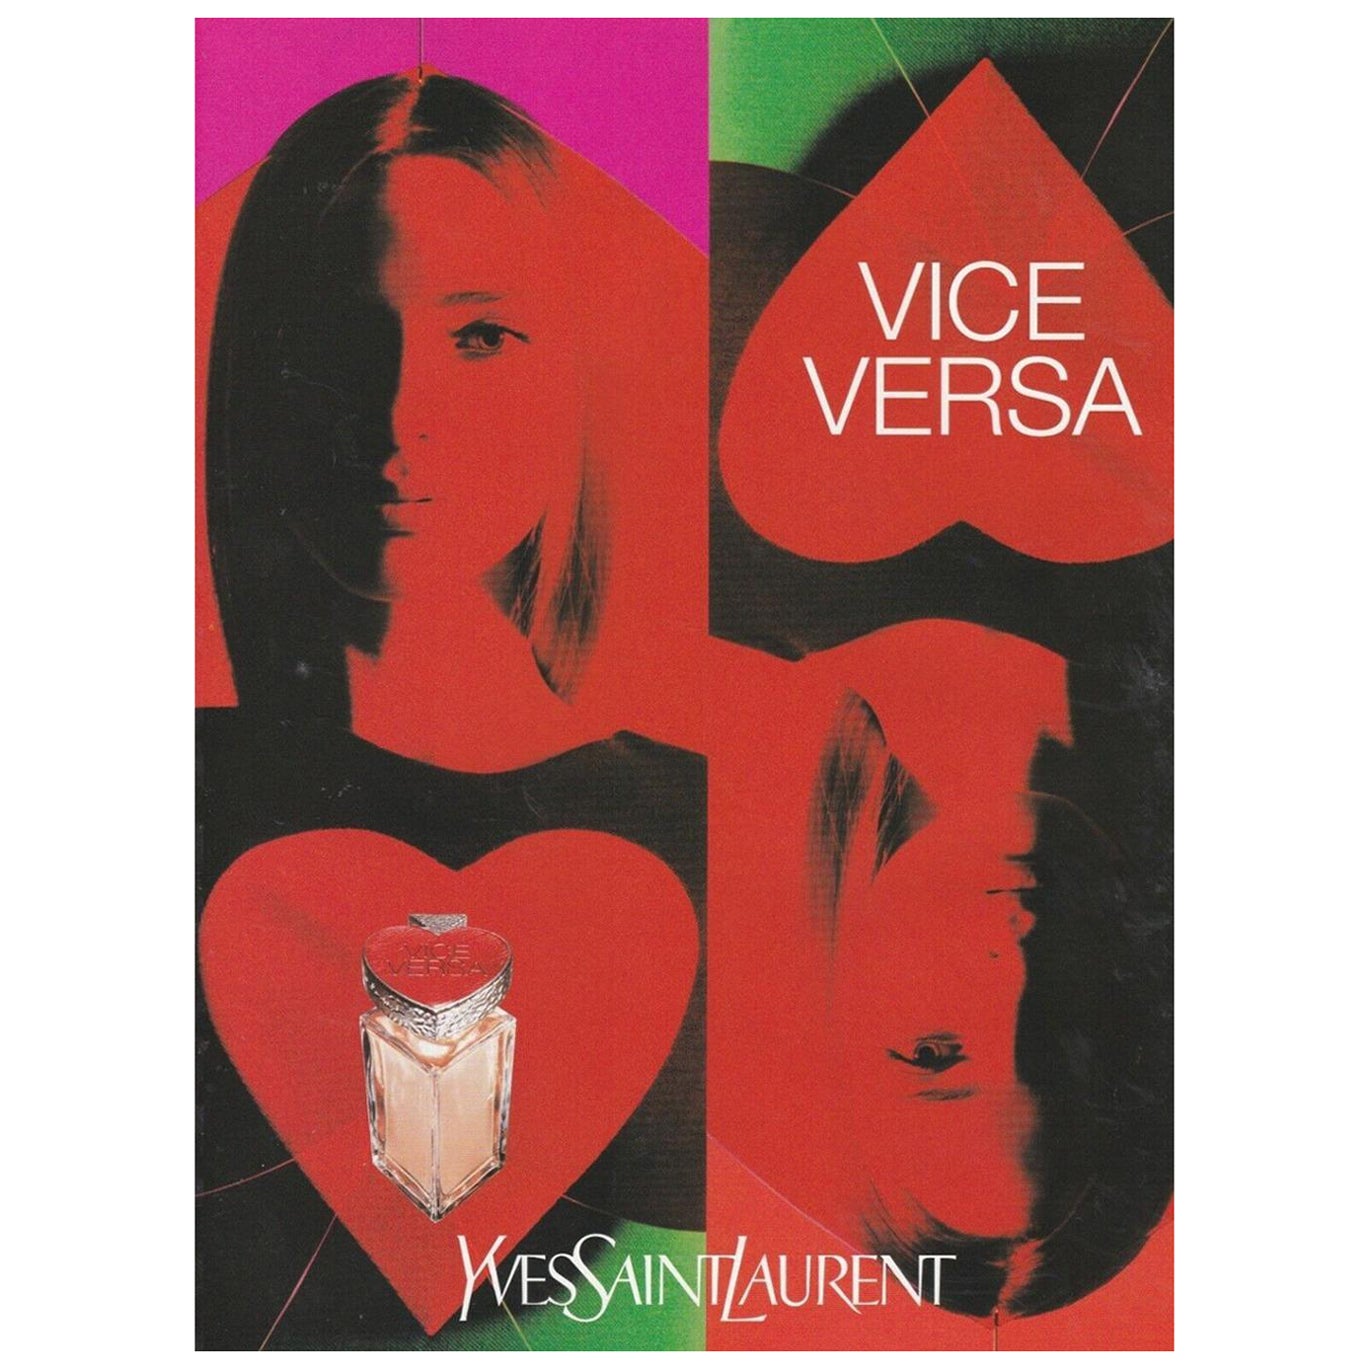 1999 Yves Saint Laurent - Vice Versa Original Vintage Poster For Sale